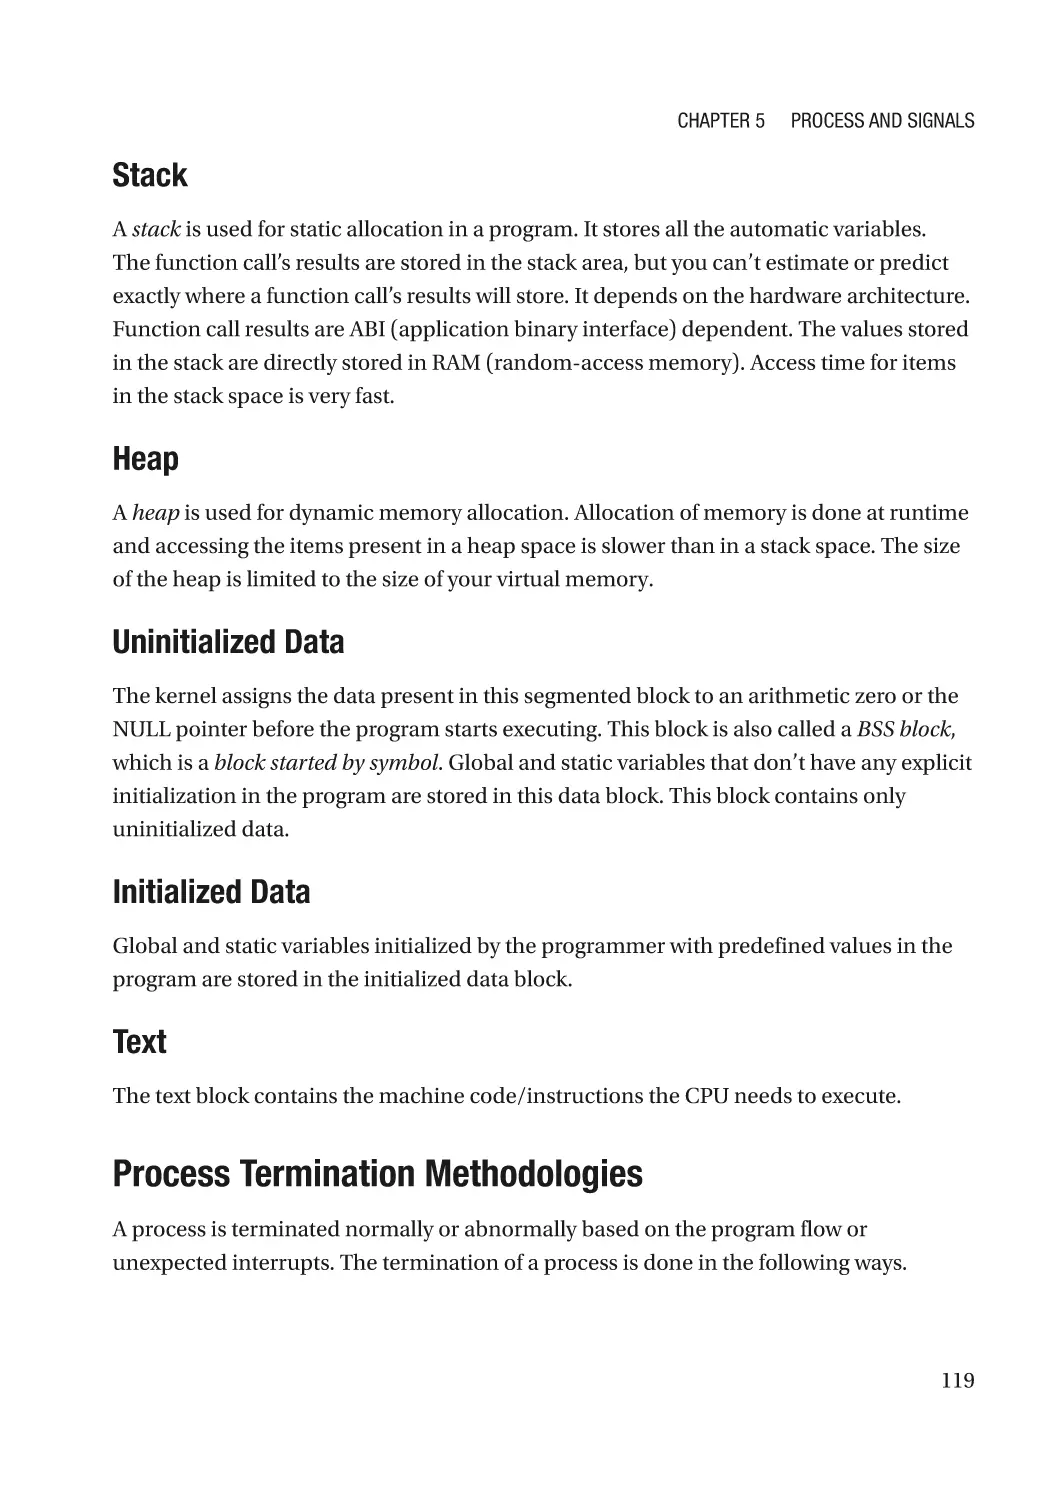 Stack
Heap
Uninitialized Data
Initialized Data
Text
Process Termination Methodologies